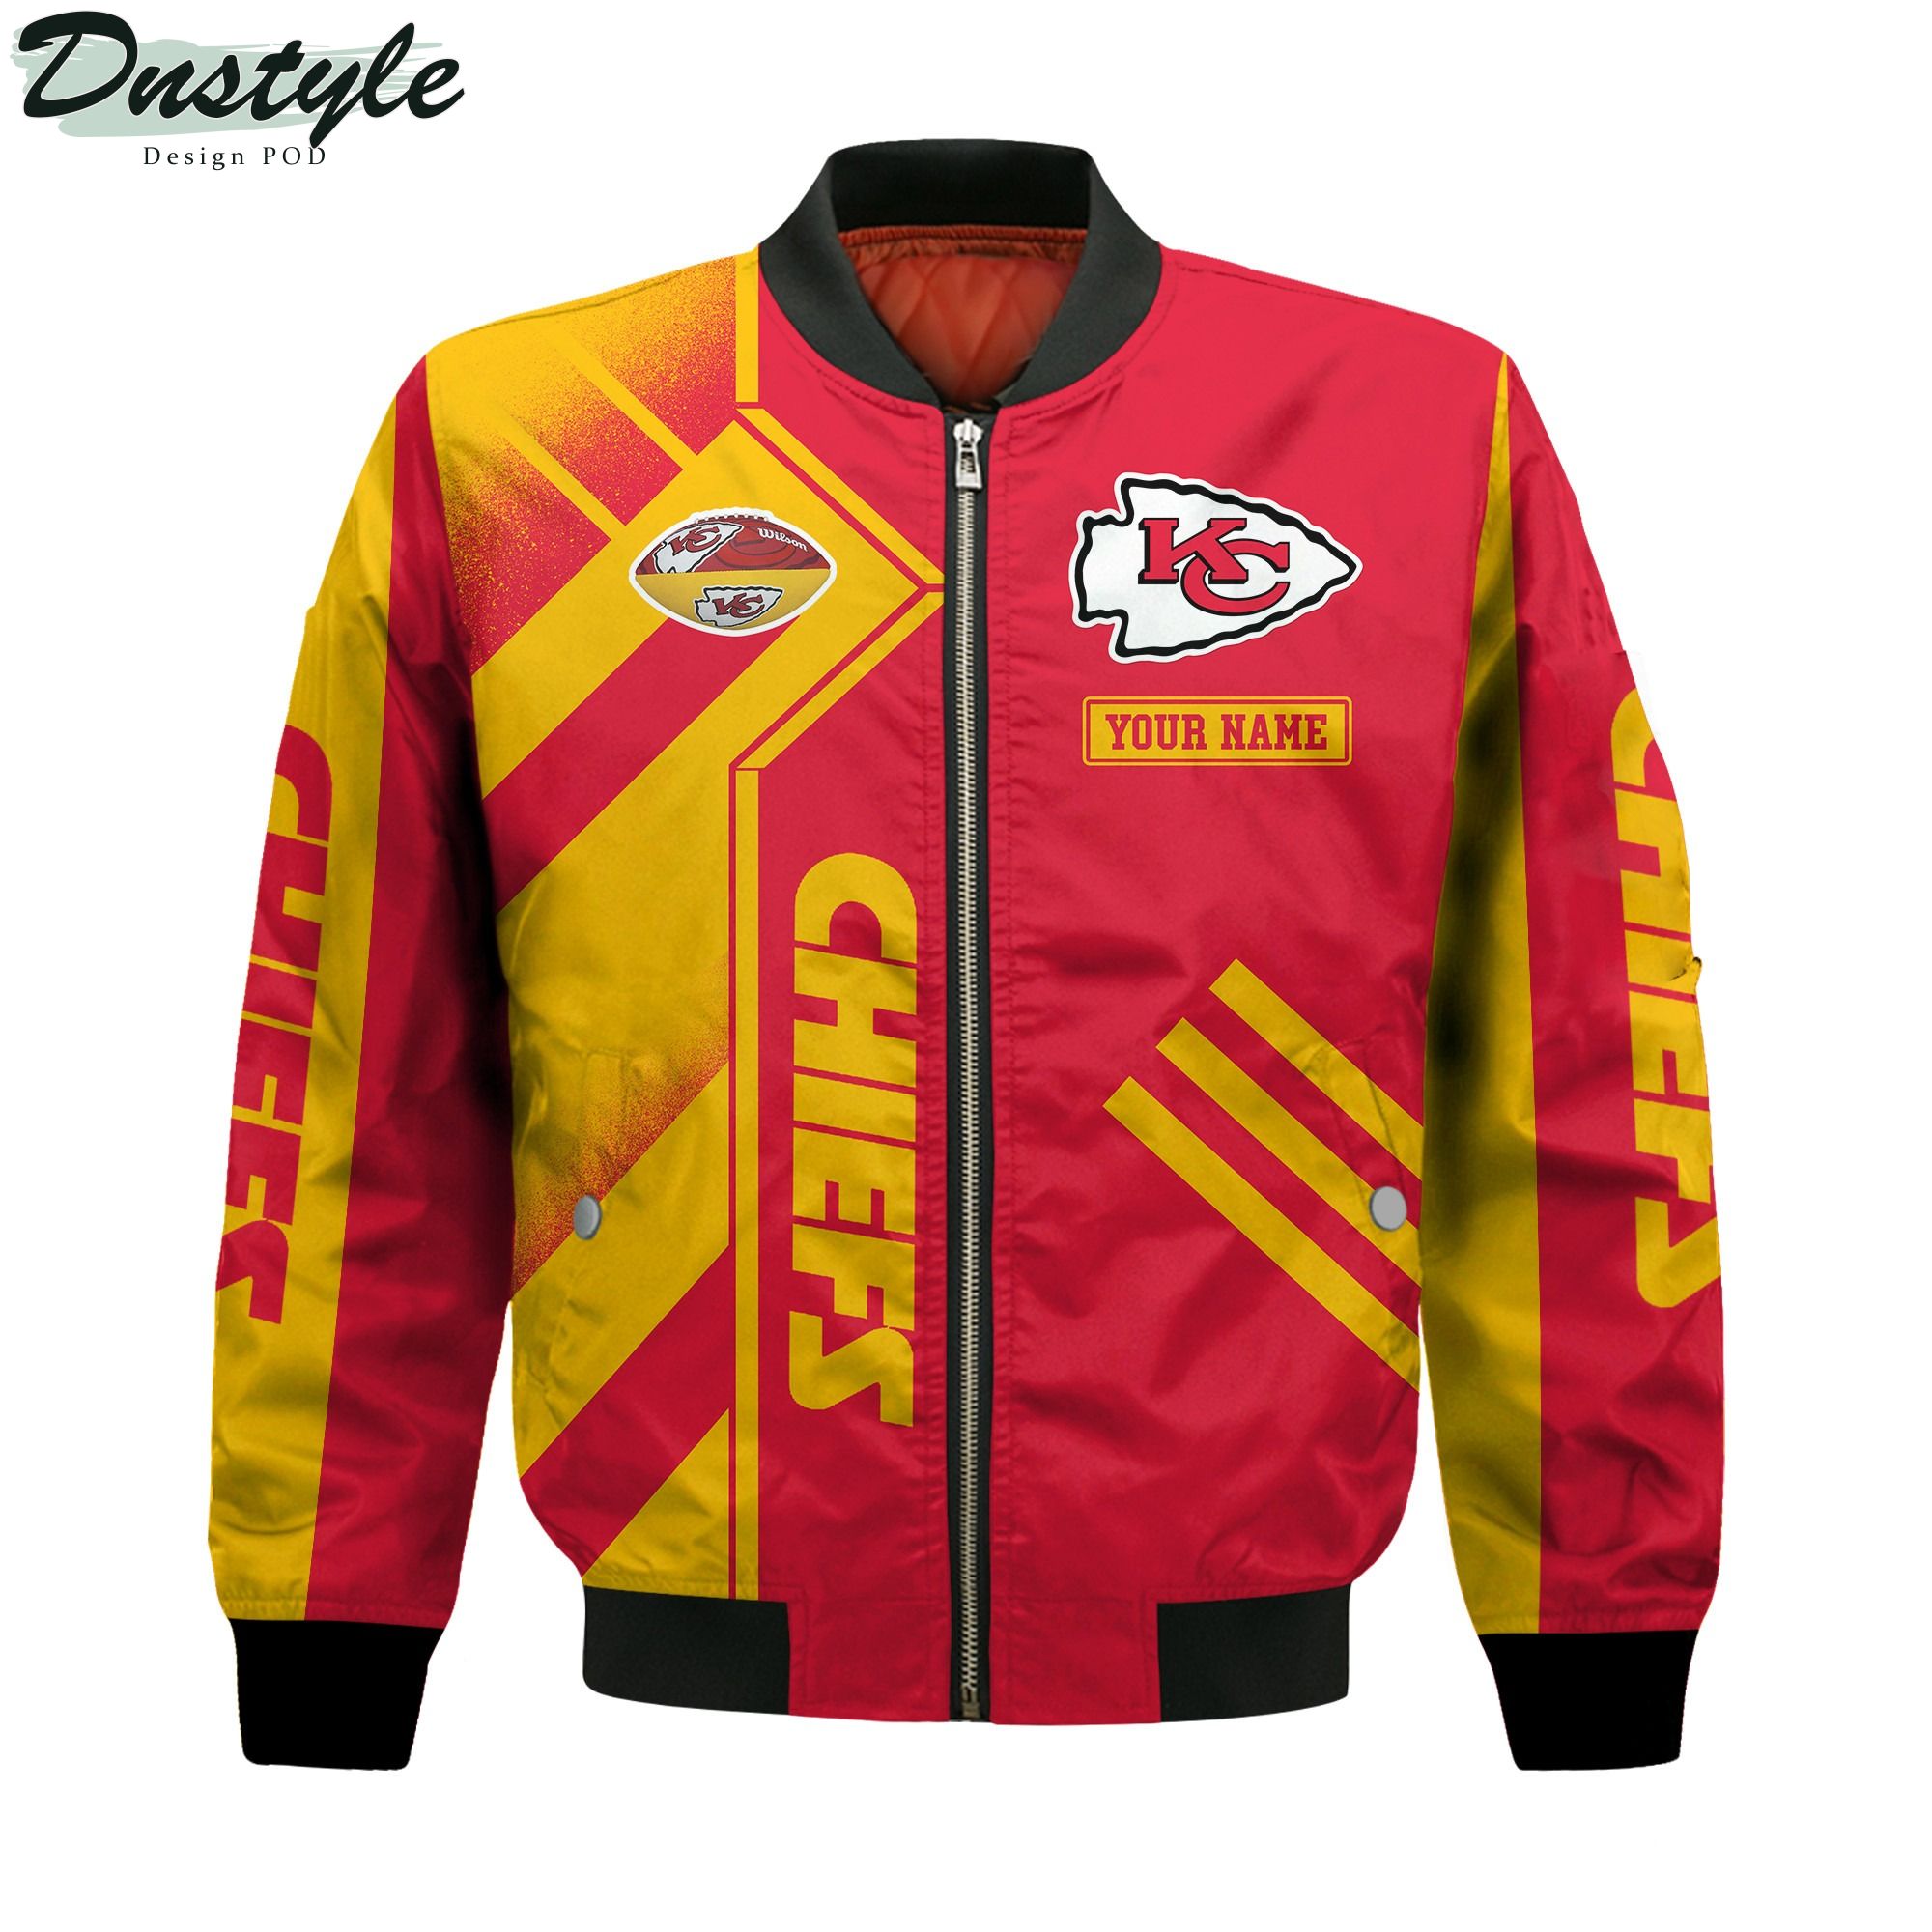 Kansas City Chiefs NFL 2X Super Bowl Champions Custom Name Bomber Jacket